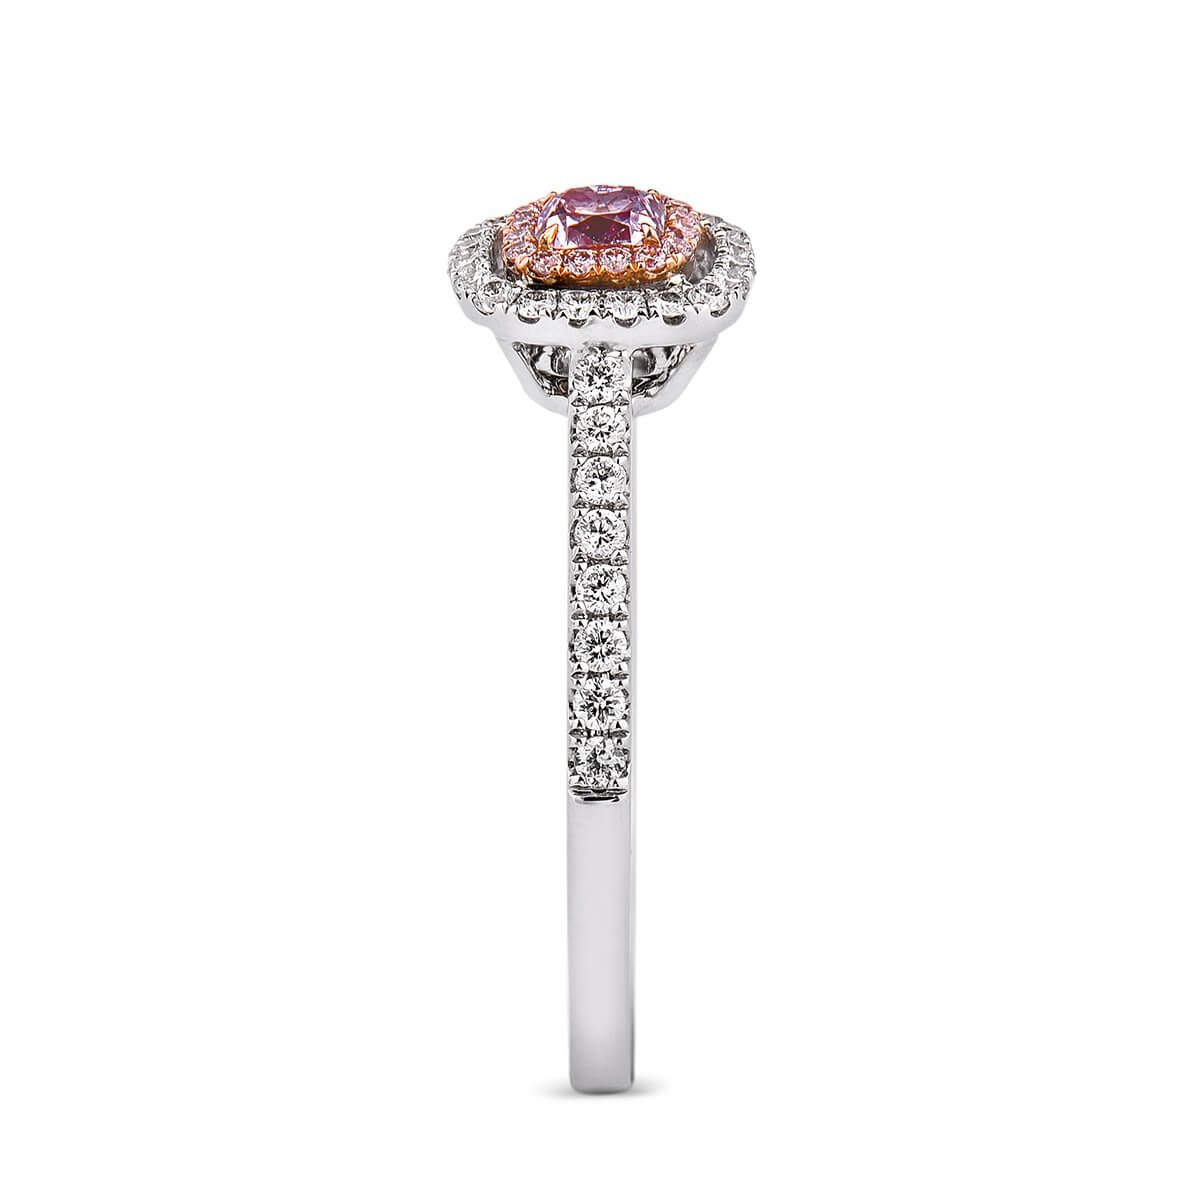 Fancy Purple Pink Diamond Ring, 0.48 Ct. TW, Radiant shape, GIA Certified, 6183351671